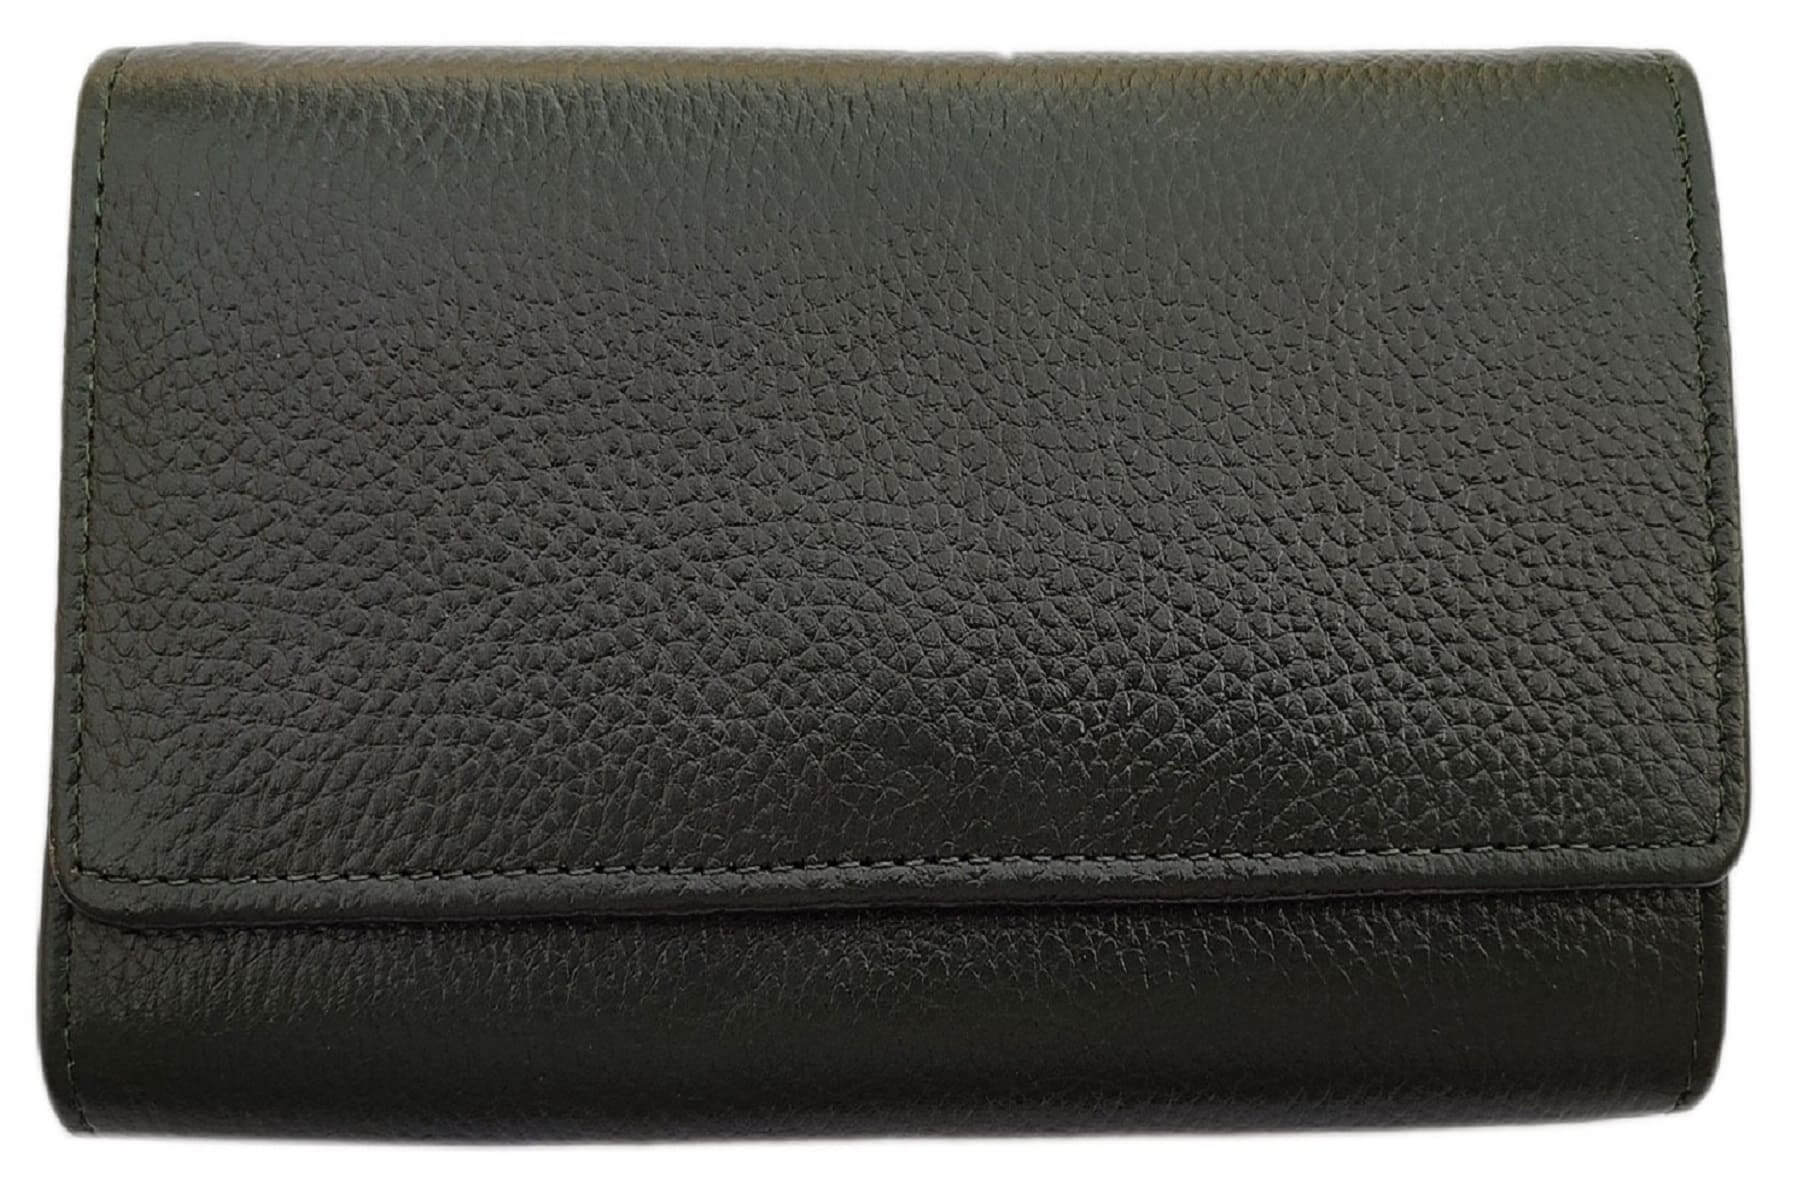 Buy Grey Handbags for Women by FOMMIL Online | Ajio.com